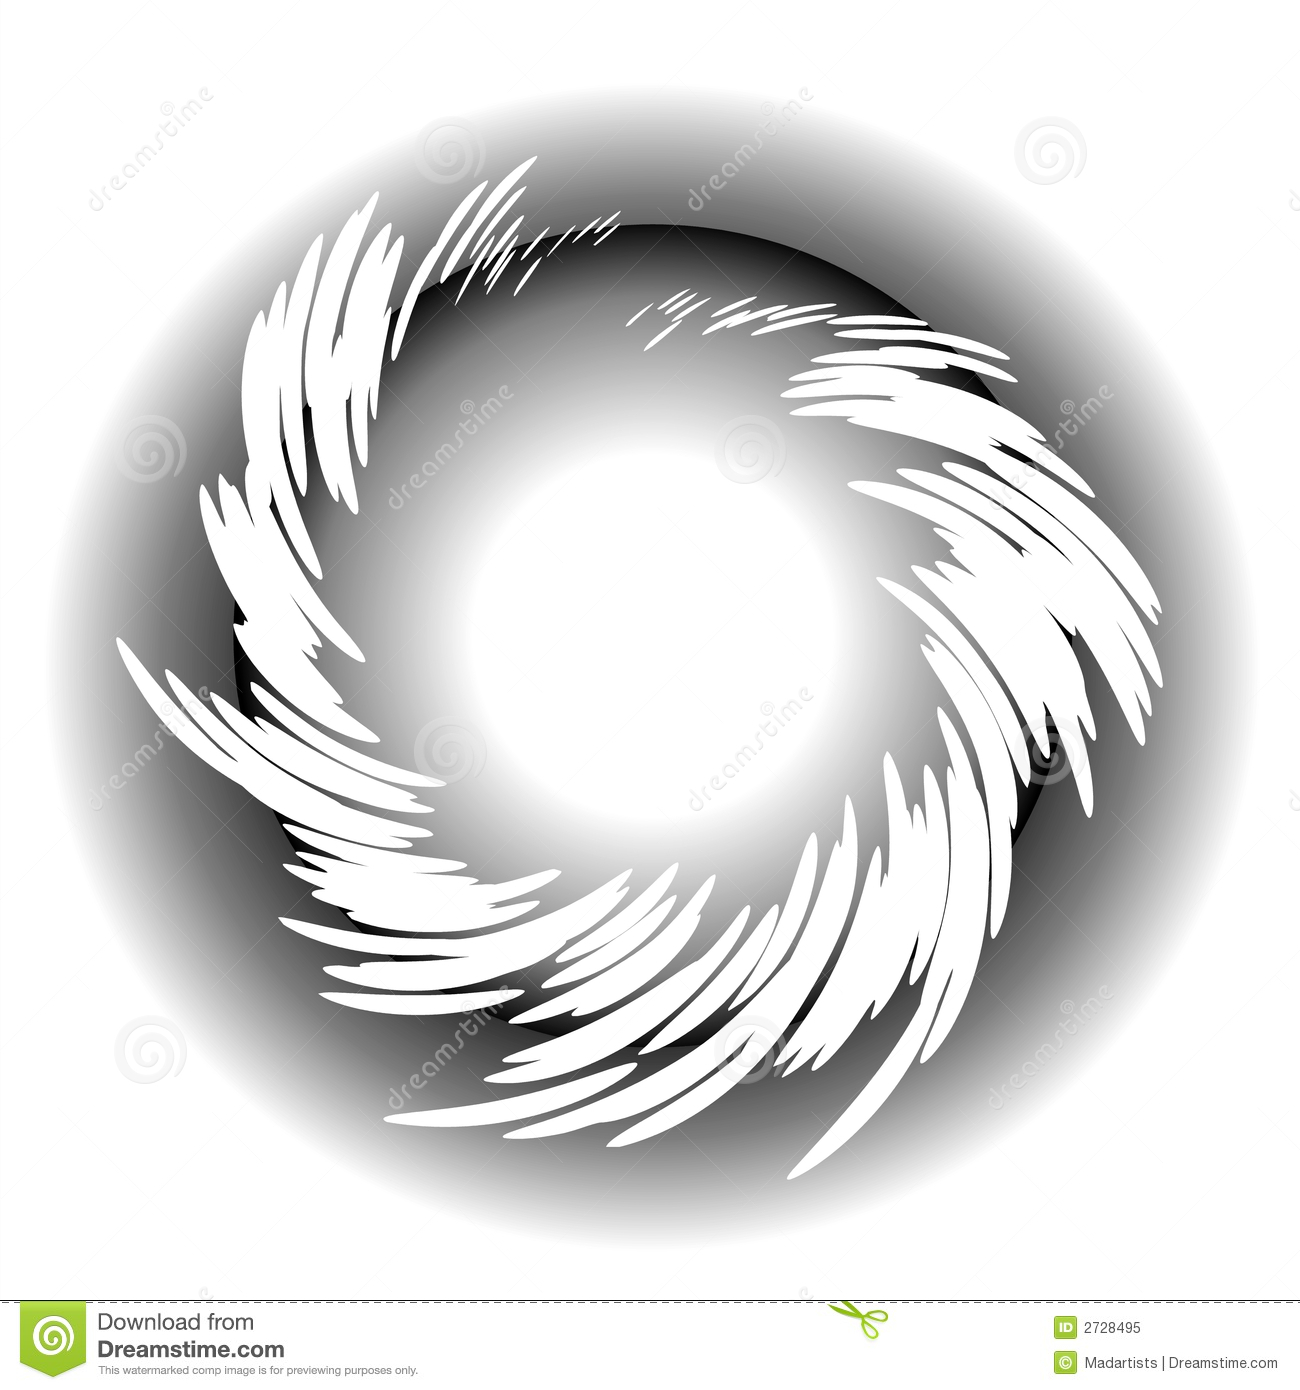 Circle swirl Logo Template photo - 1